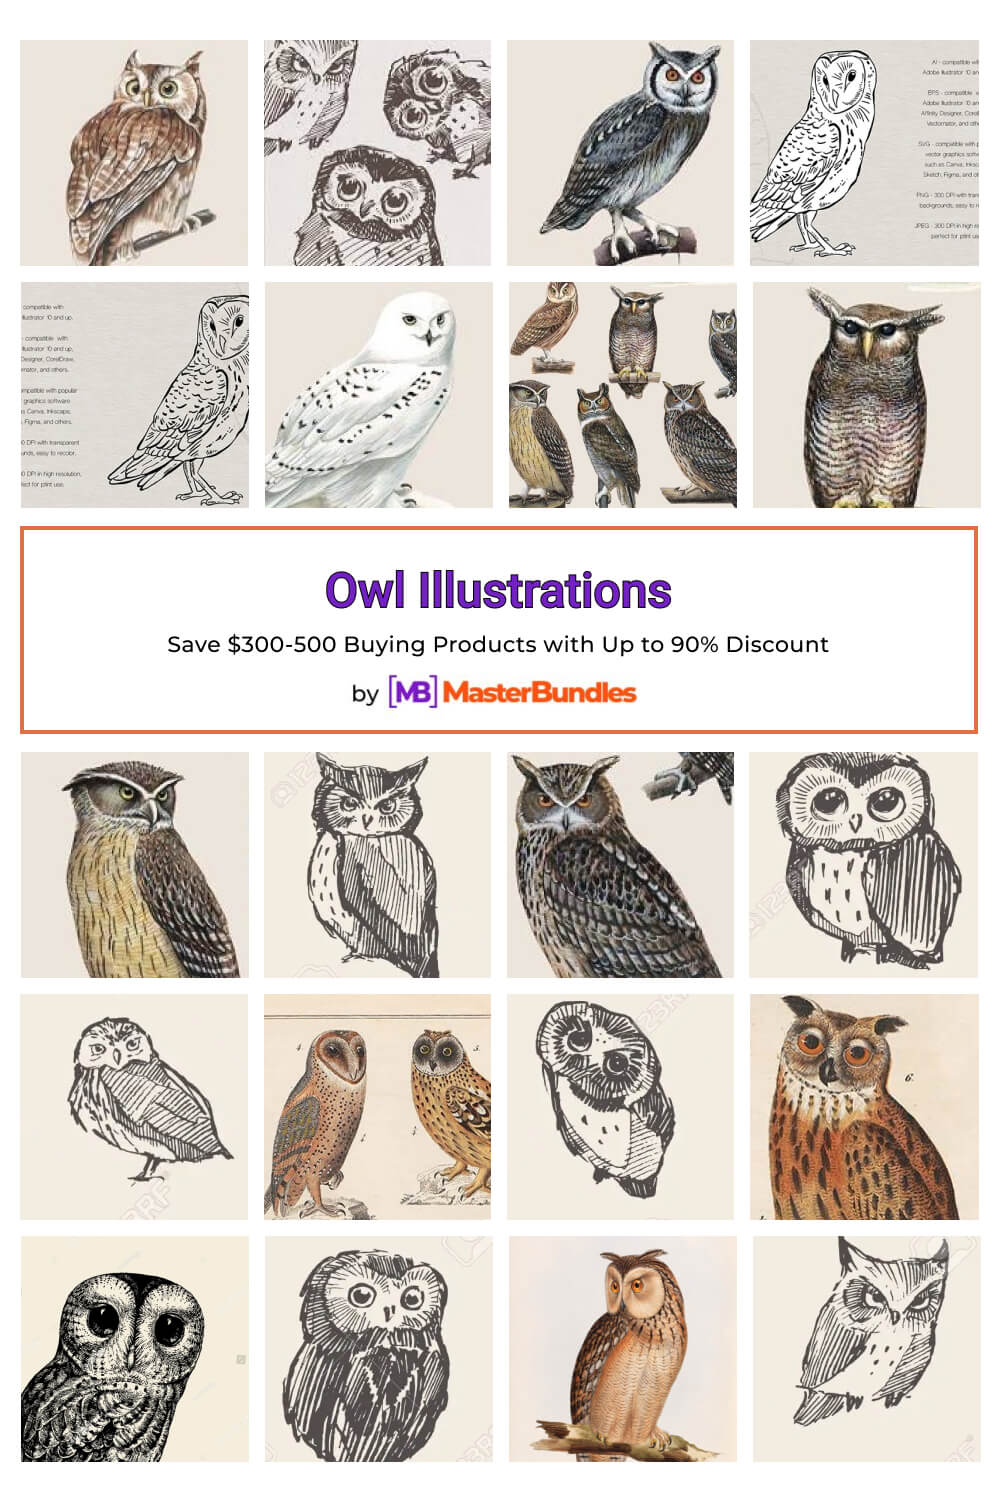 owl illustrations pinterest image.